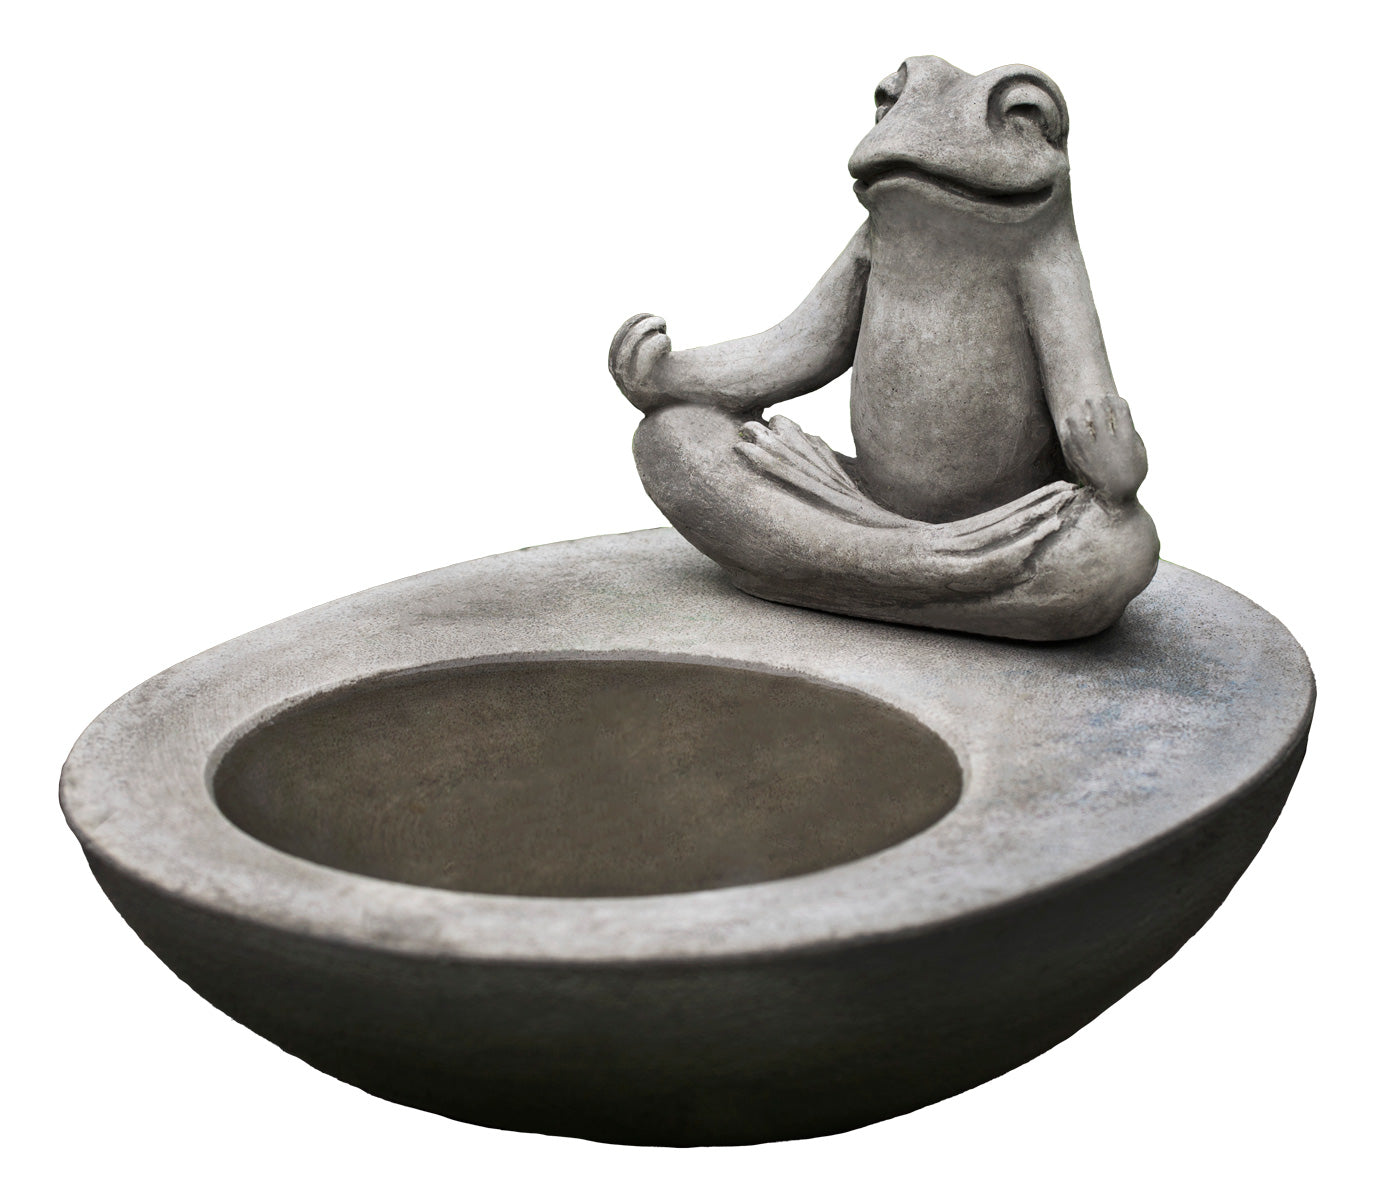 Zen Frog Bird Bath